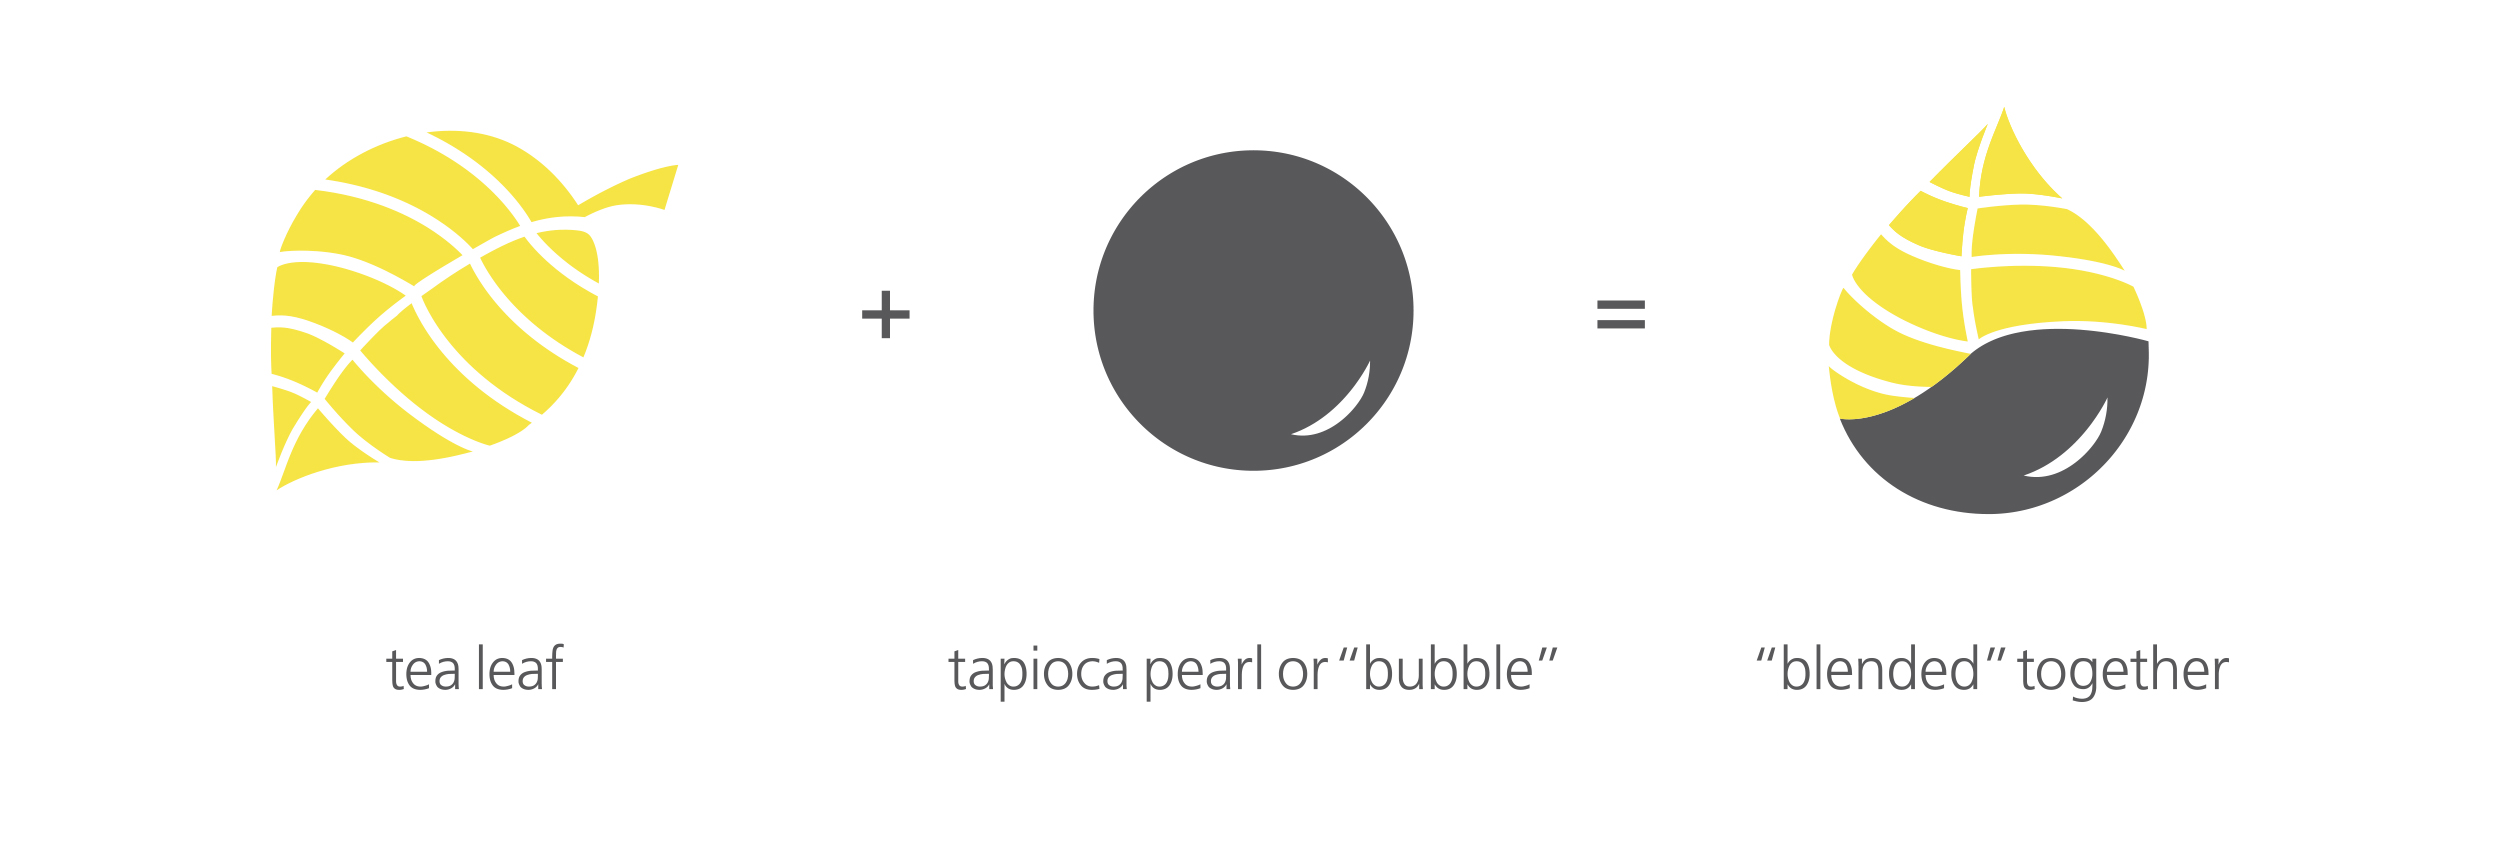 Tea Leaf + Tapioca Pearl or "Bubble" = "Blended" together (logo process) | Blend Bubble Tea